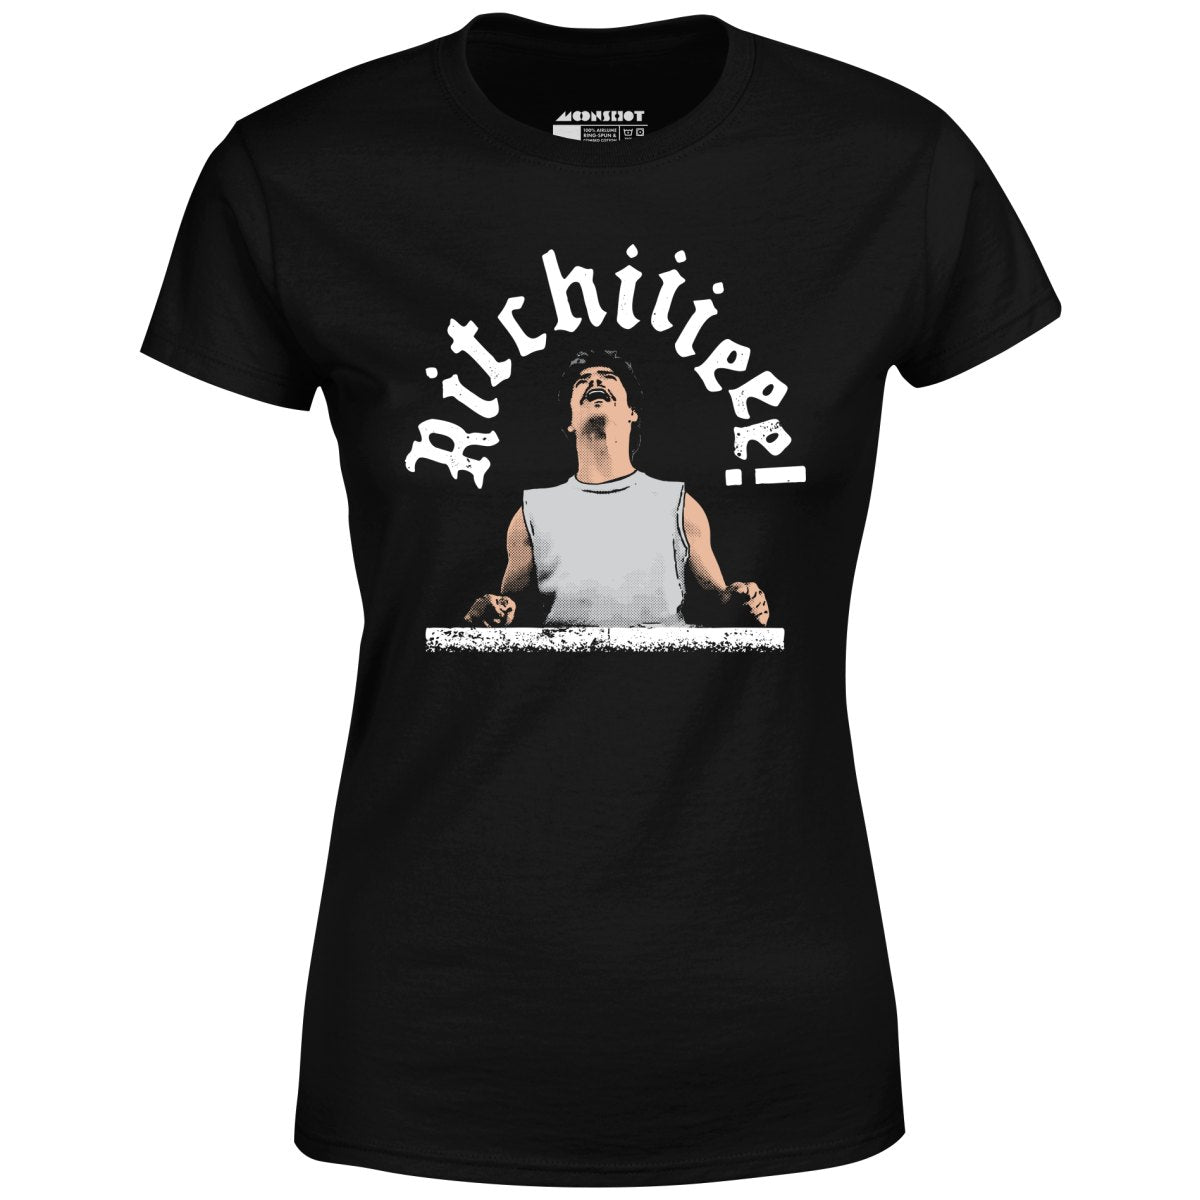 Ritchiiieee! - Women's T-Shirt